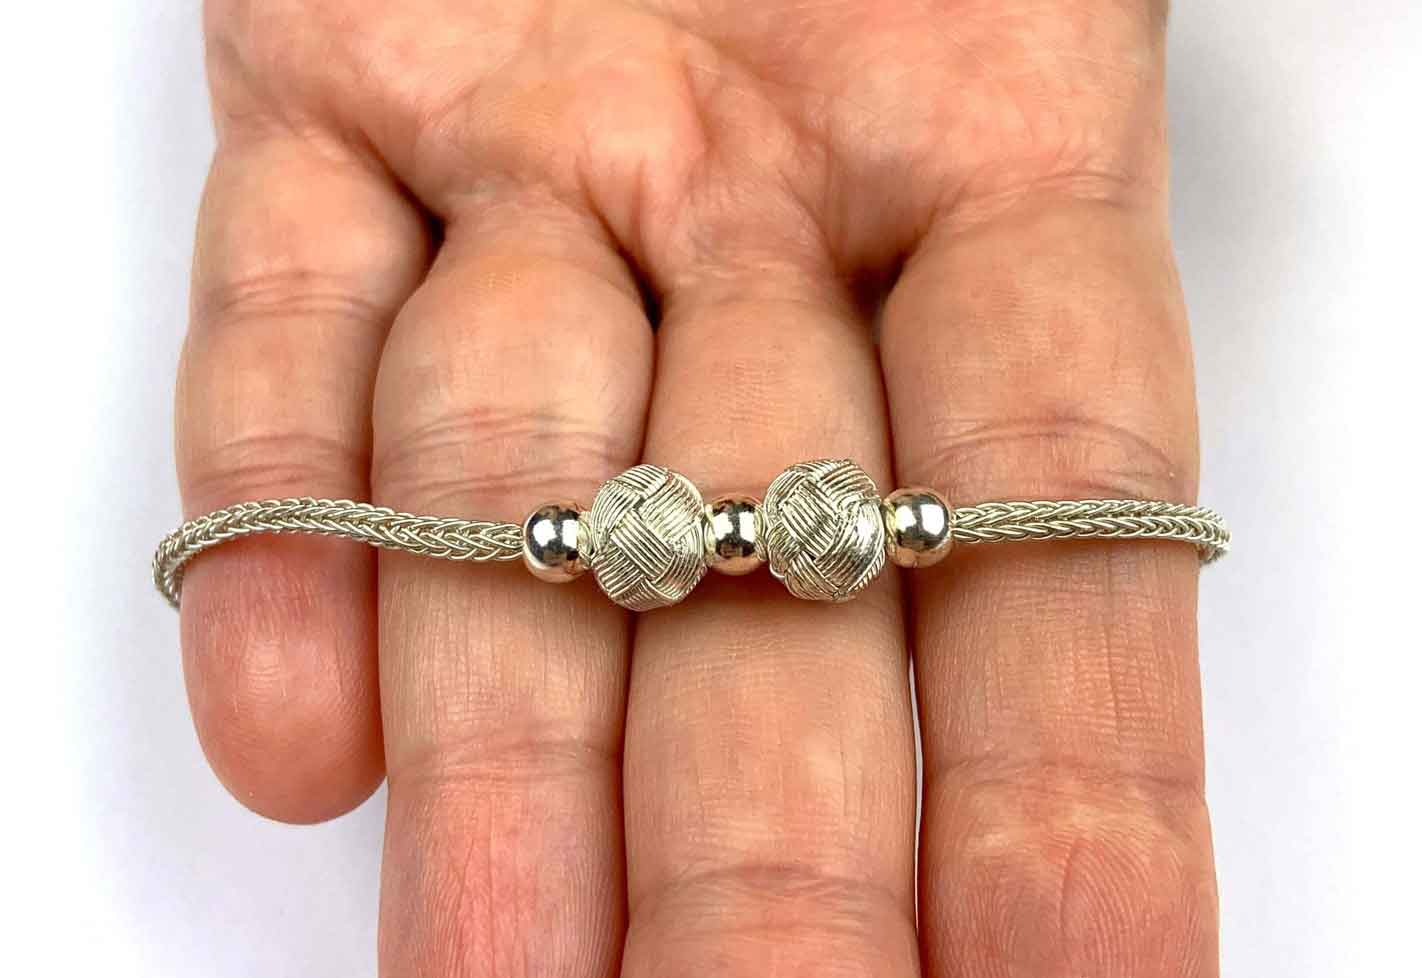 BRIDESMAID BRACELET, Handmade Silver, Unique Design Band, Bride Gift Bracelet, Silver Beads, Braided Bracelet